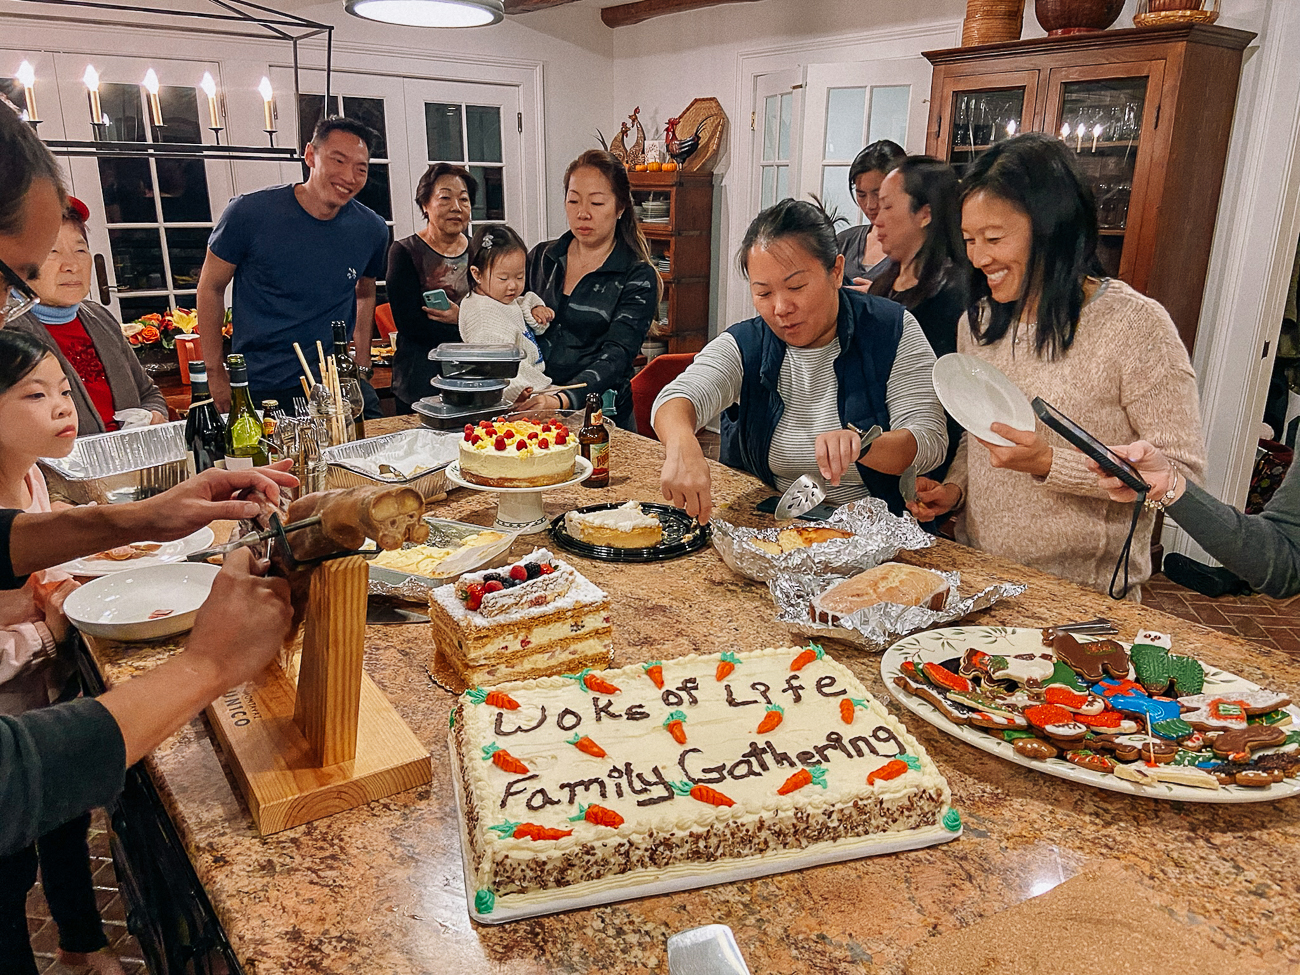 Woks of Life Family Gathering Carrot Cake